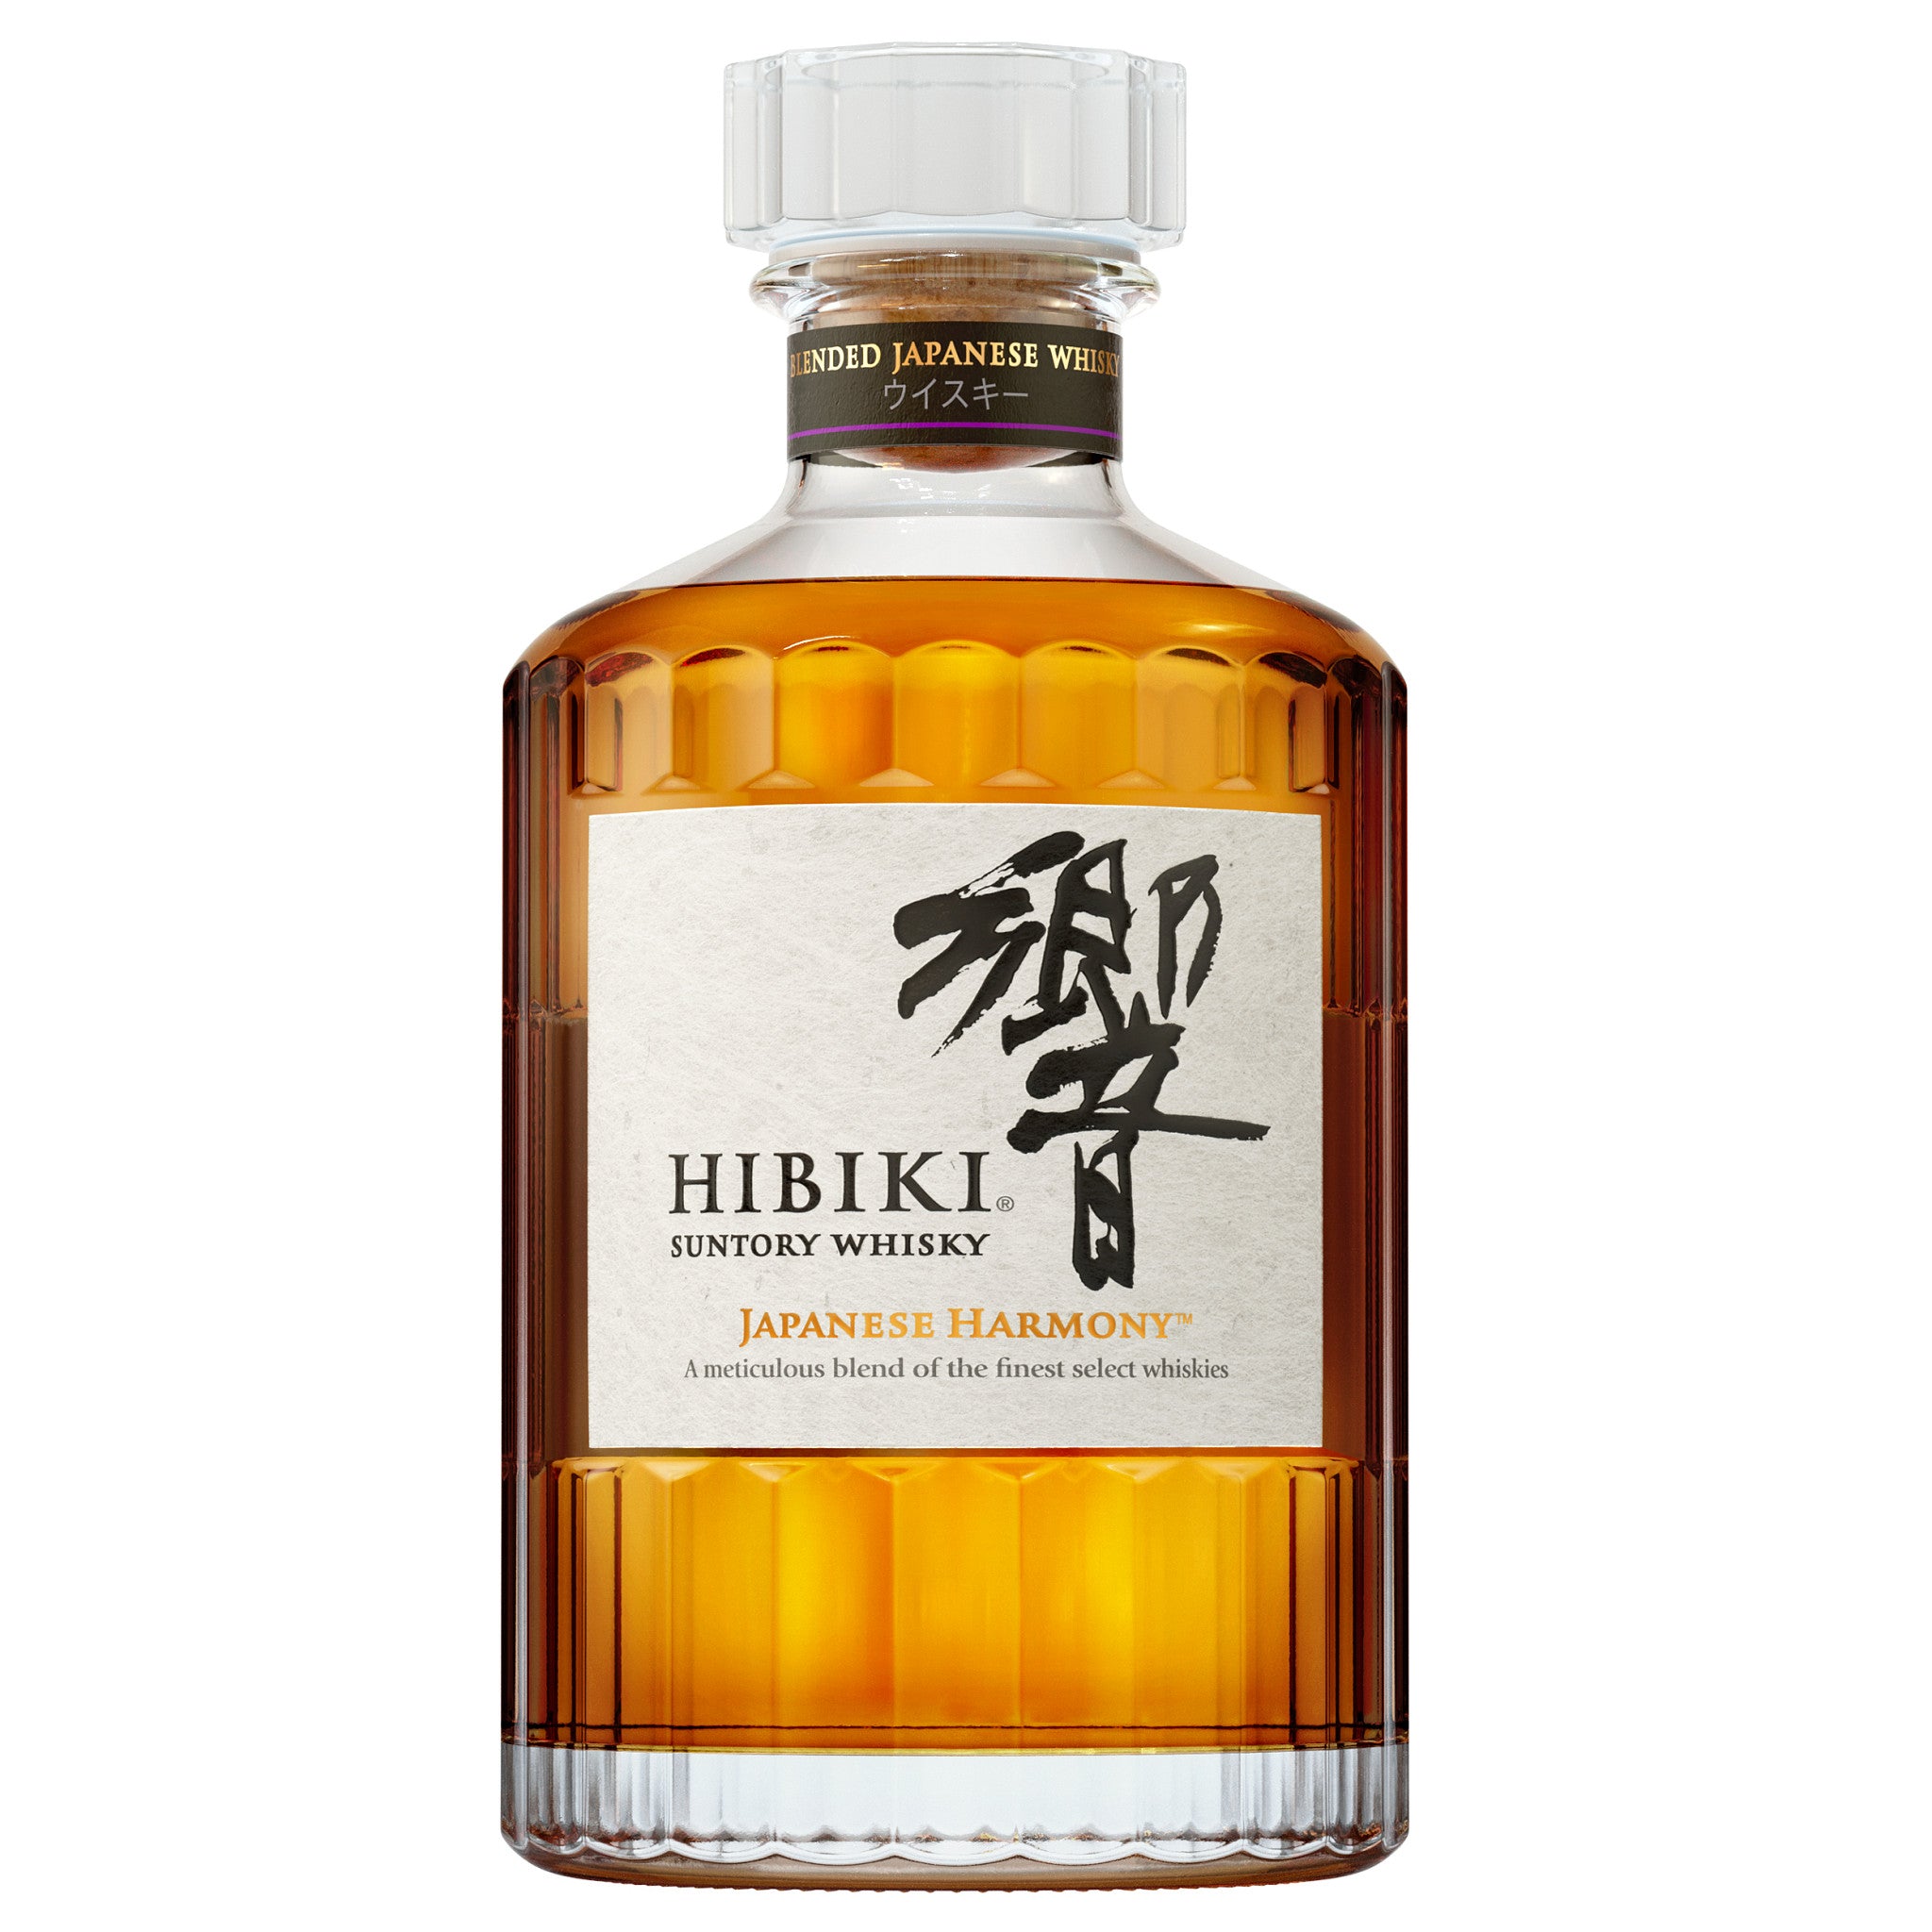 Hibiki harmony 0,7 Liter - Suntory Whisky